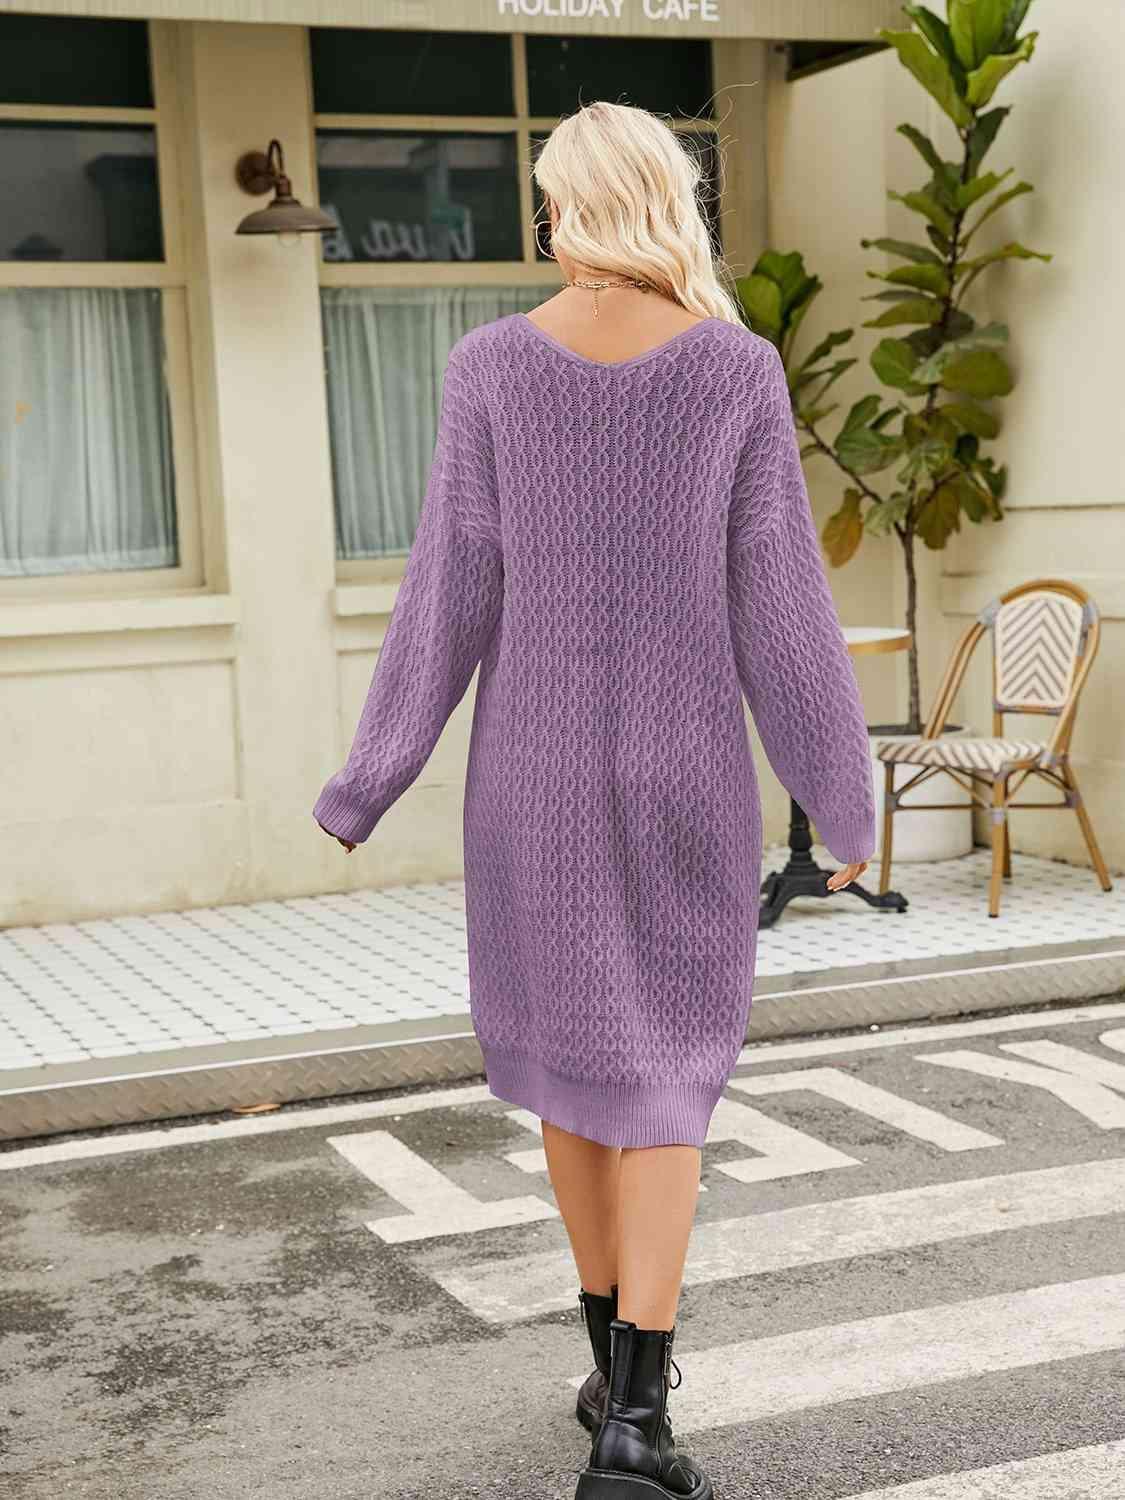 Relaxing Autumn V-Neck Long Sleeve Knit Sweater Dress - MXSTUDIO.COM